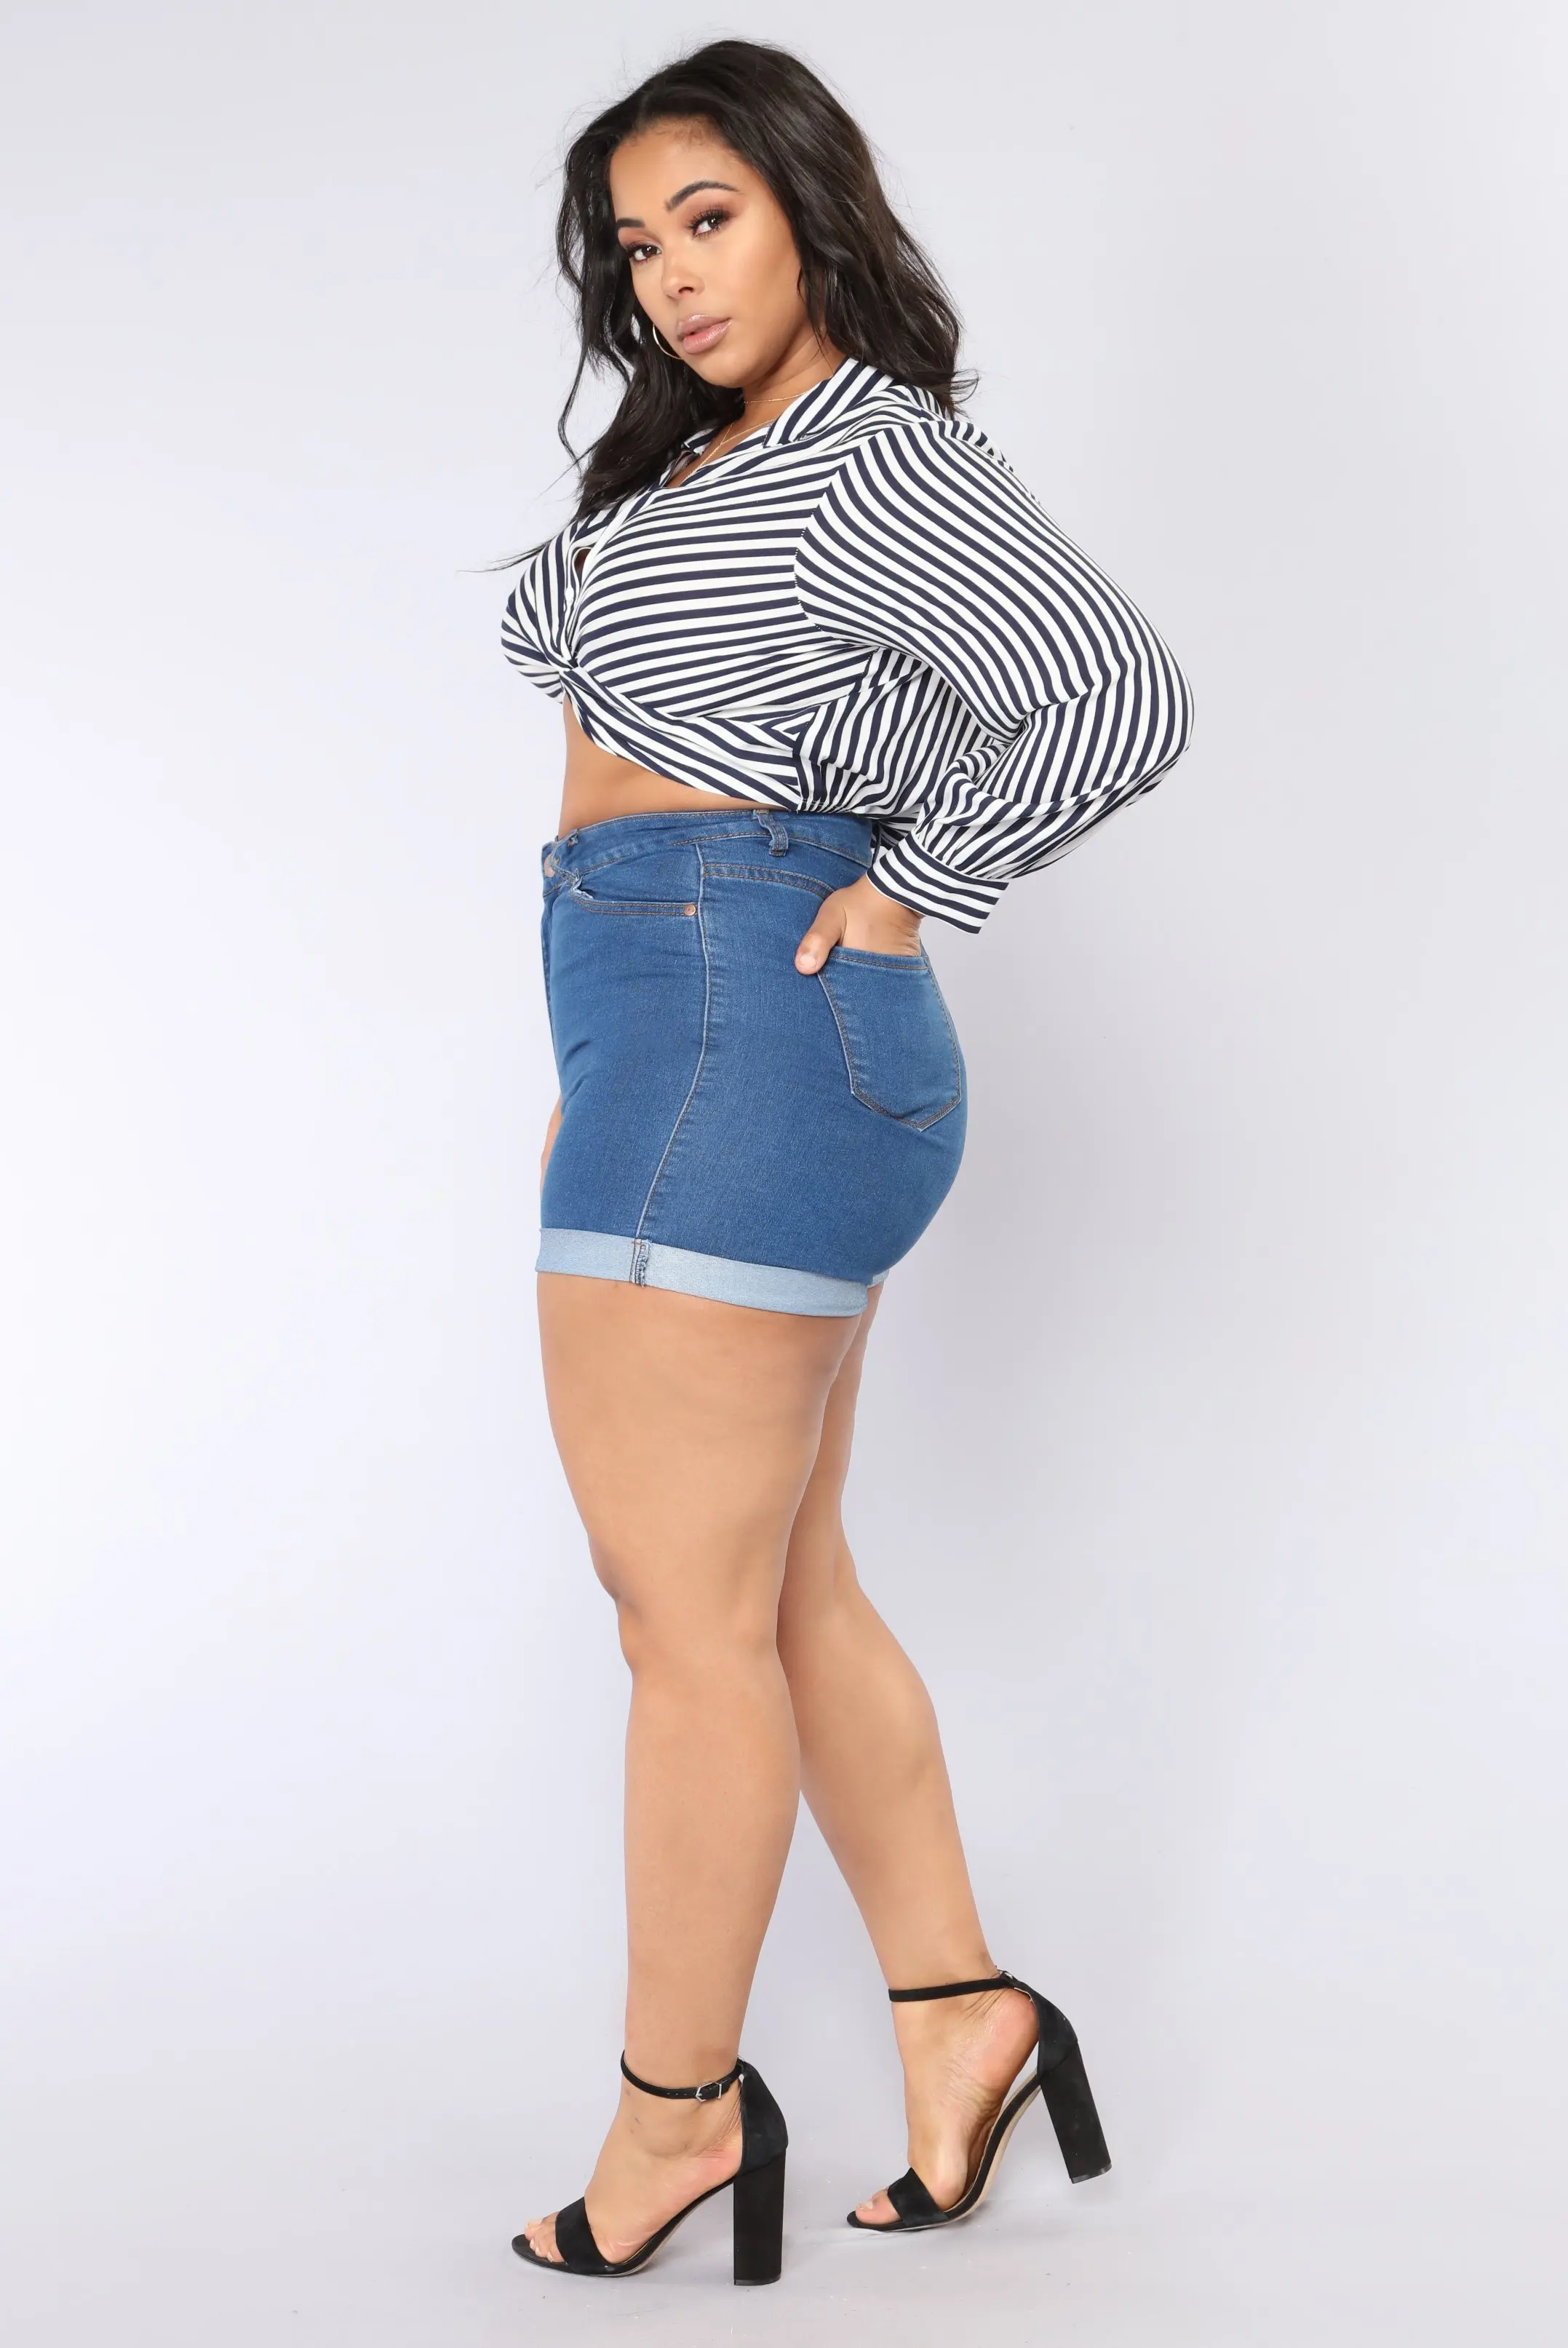 Sexy Skinny Turn Up Hot Short Denim Jeans For Fat Girls - Buy Hot Short ...